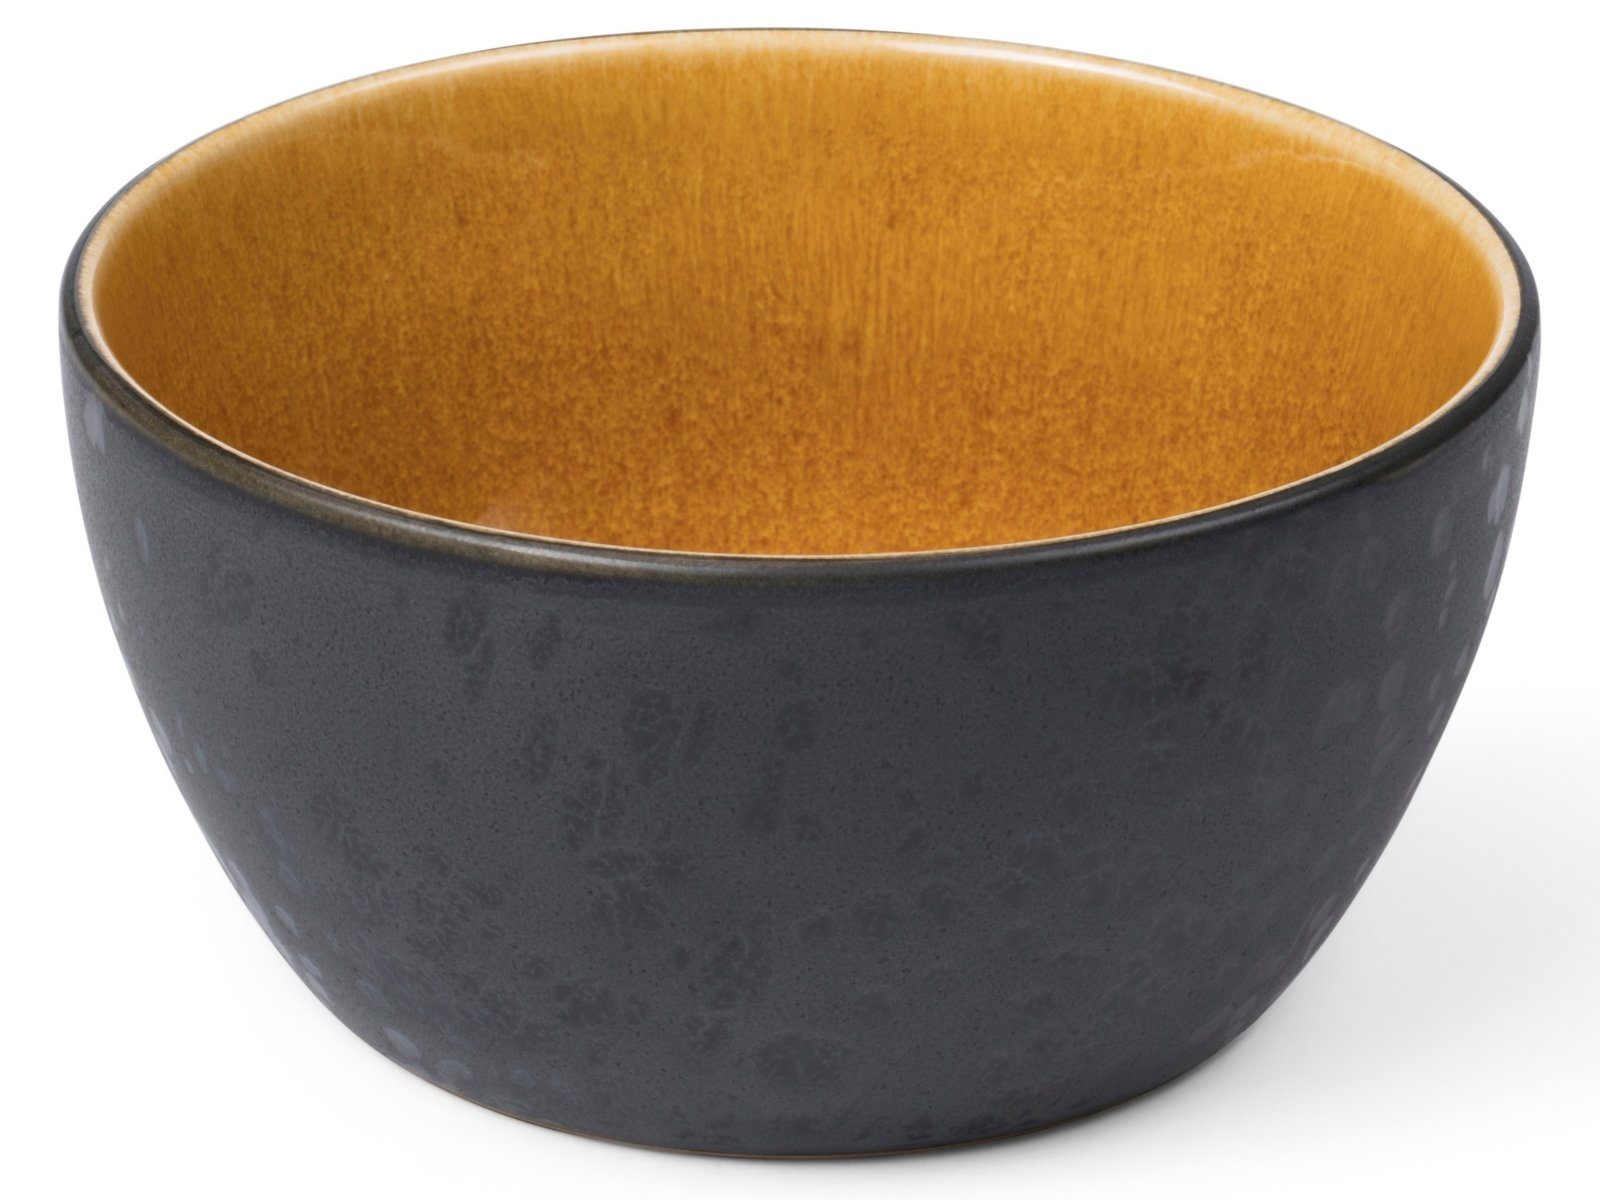 Bitz Schale Bowl matt black / shiny amber 12 cm, Steingut, (Bowls)